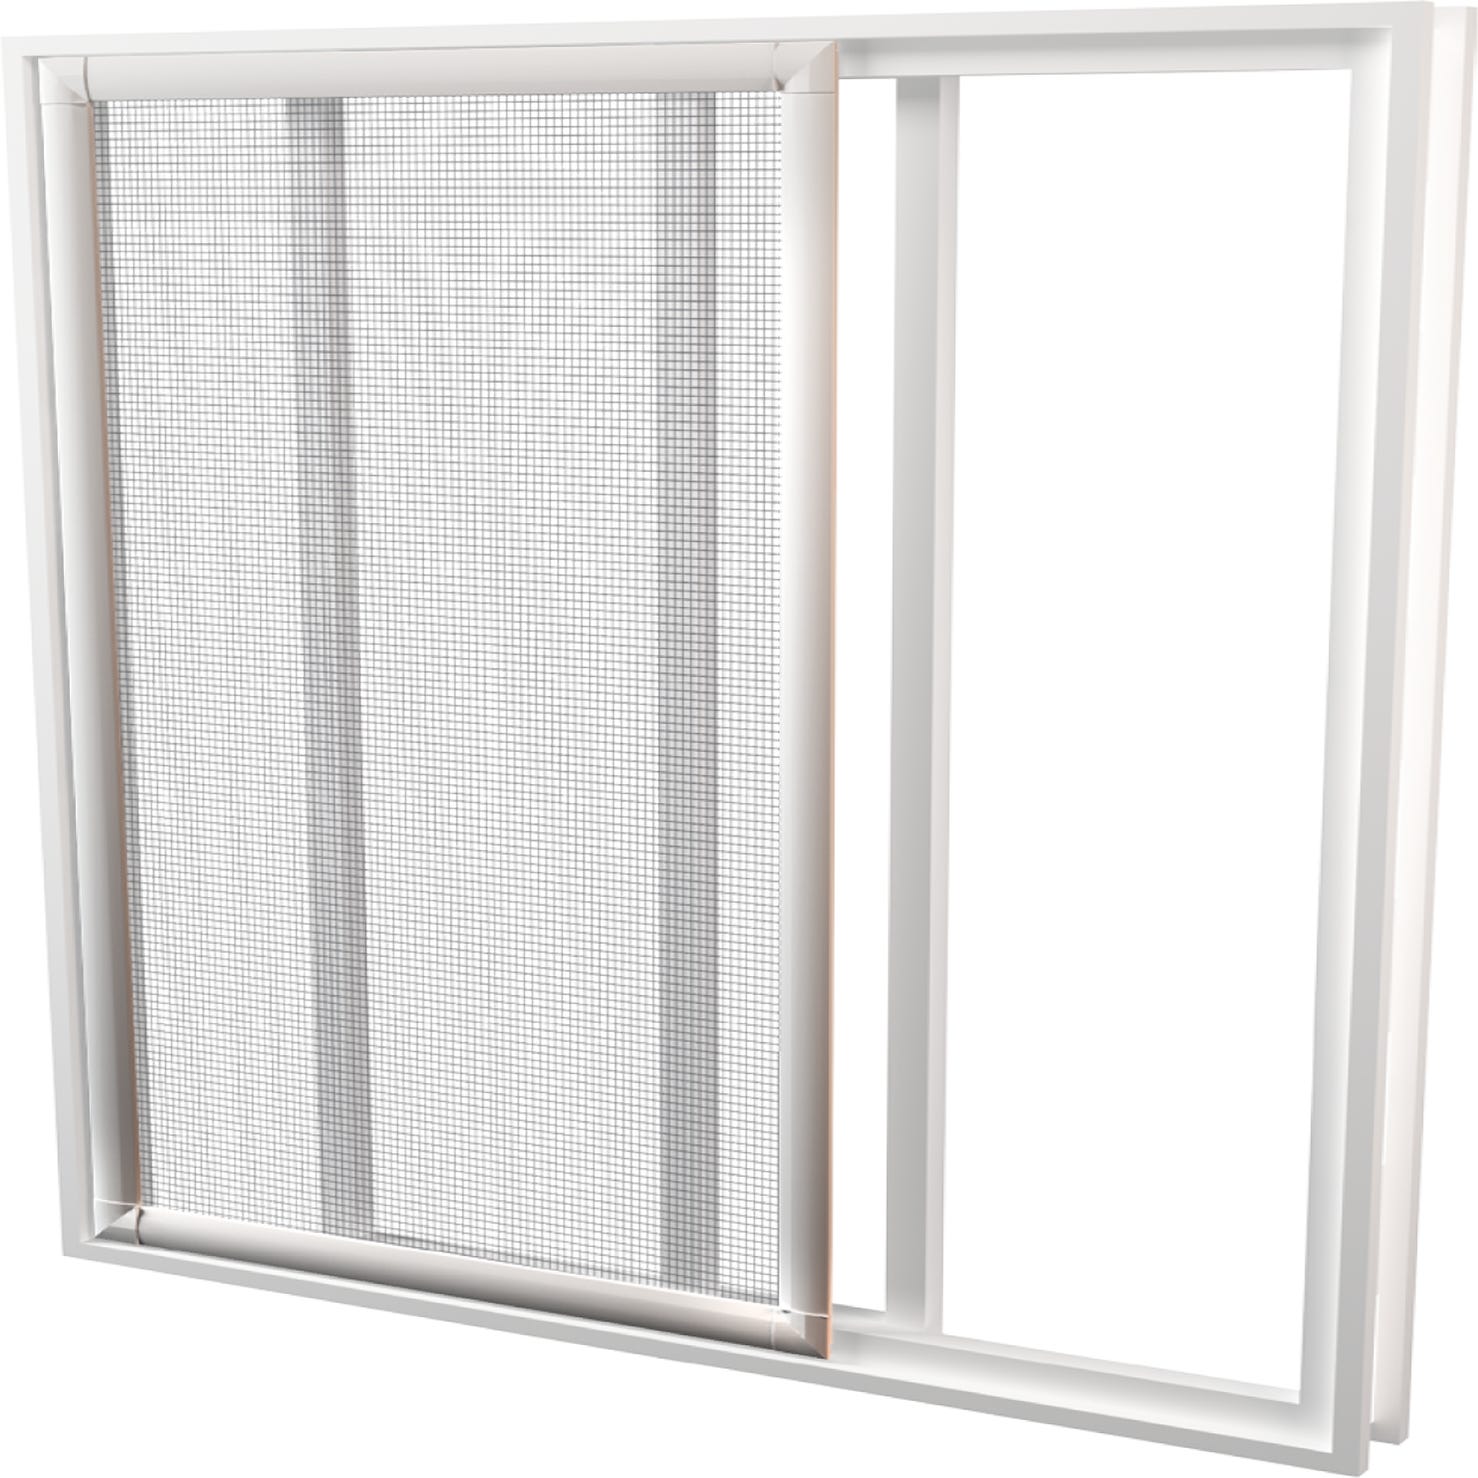 Mosquitera ventana corredera de color plata de 90x140 cm (ancho x